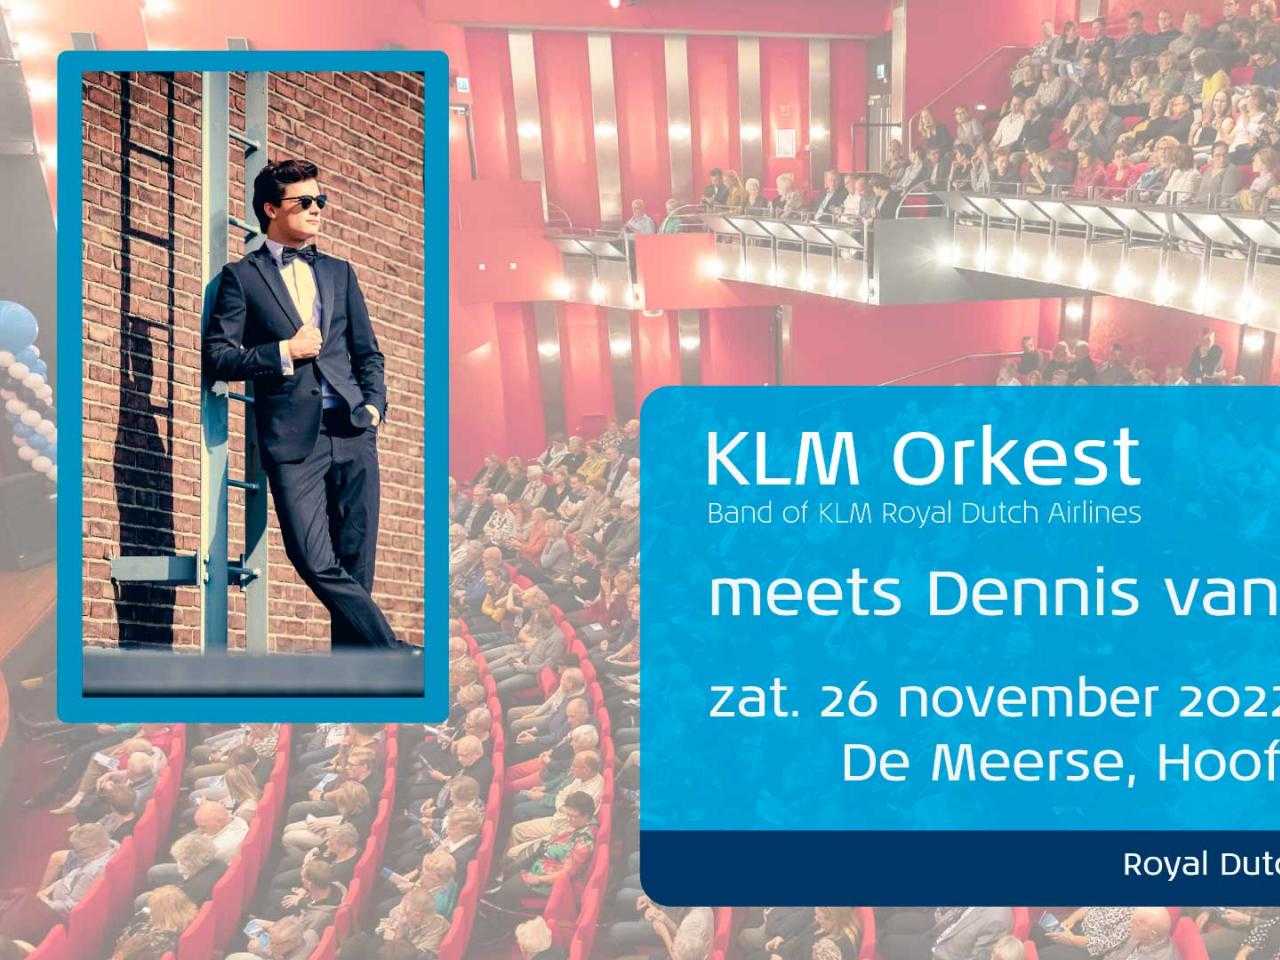 KLM orkest